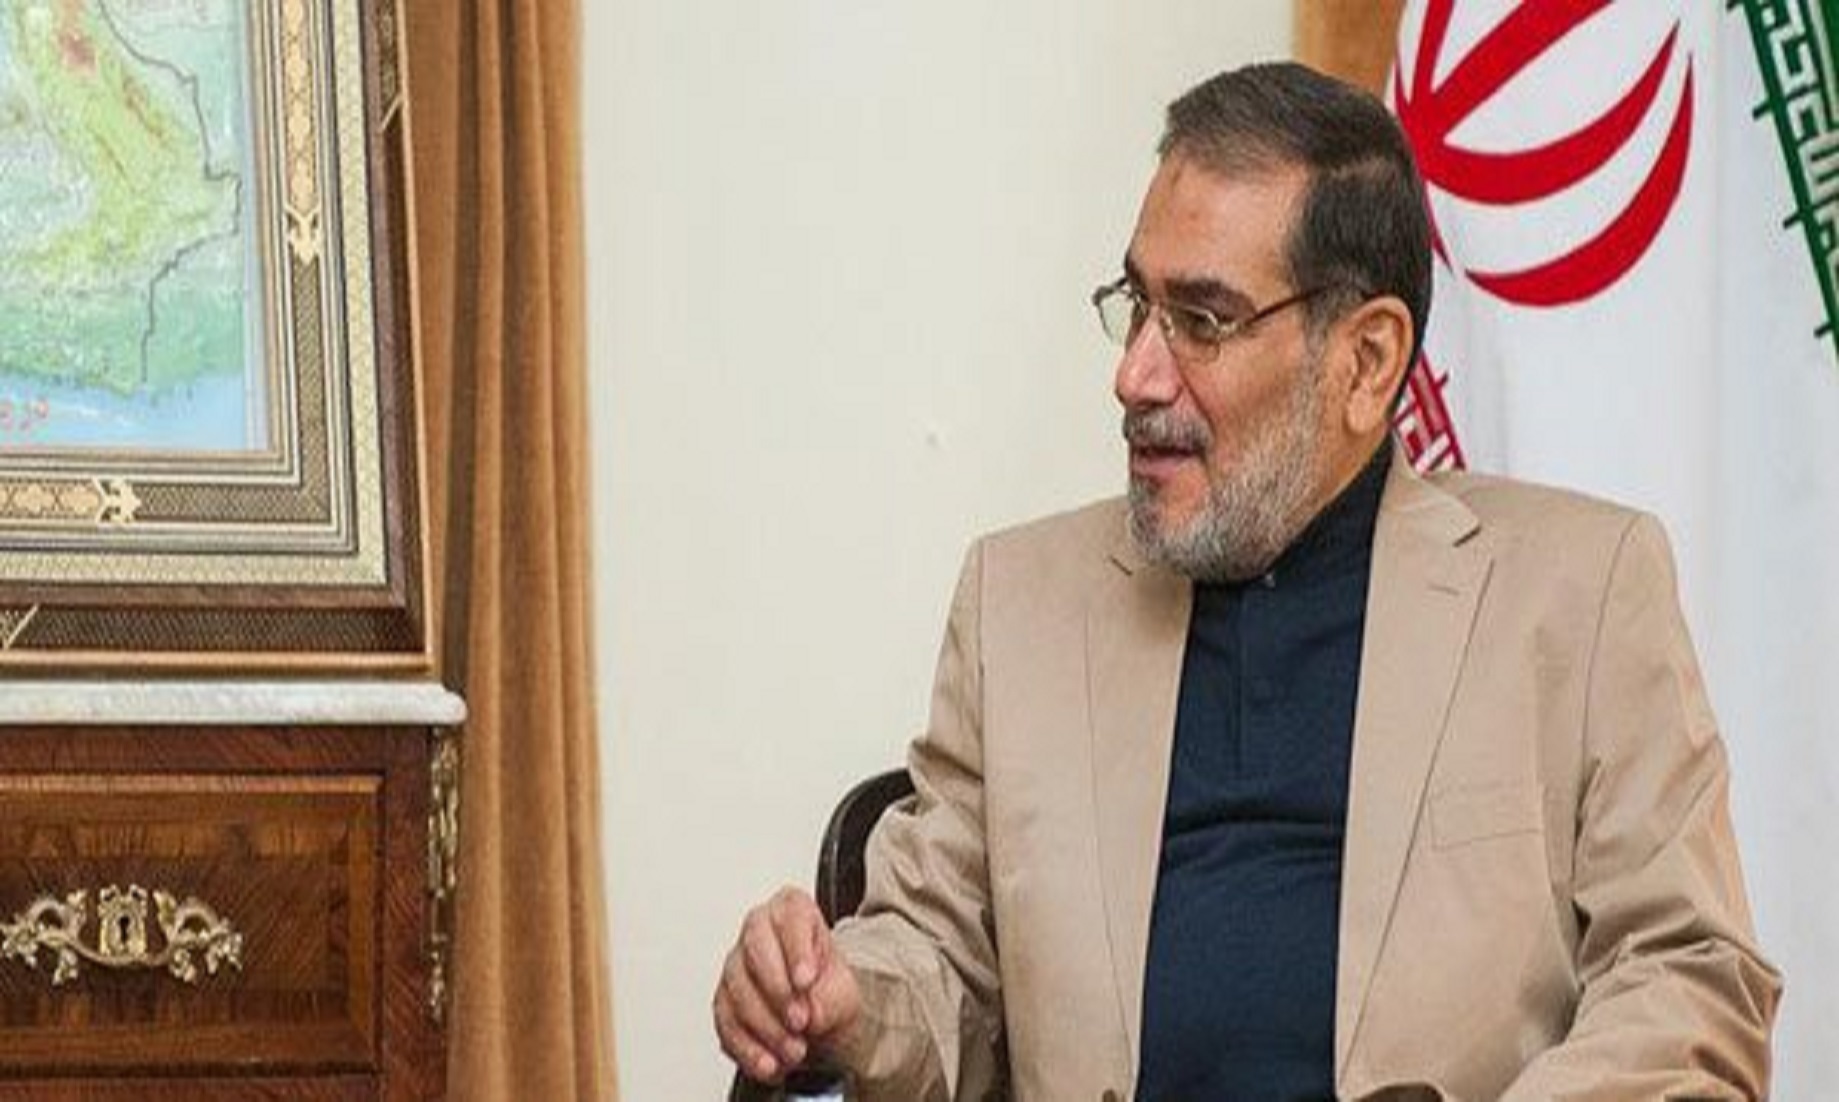 Iran Says U.S. Sanctions “More Dangerous” Than COVID-19